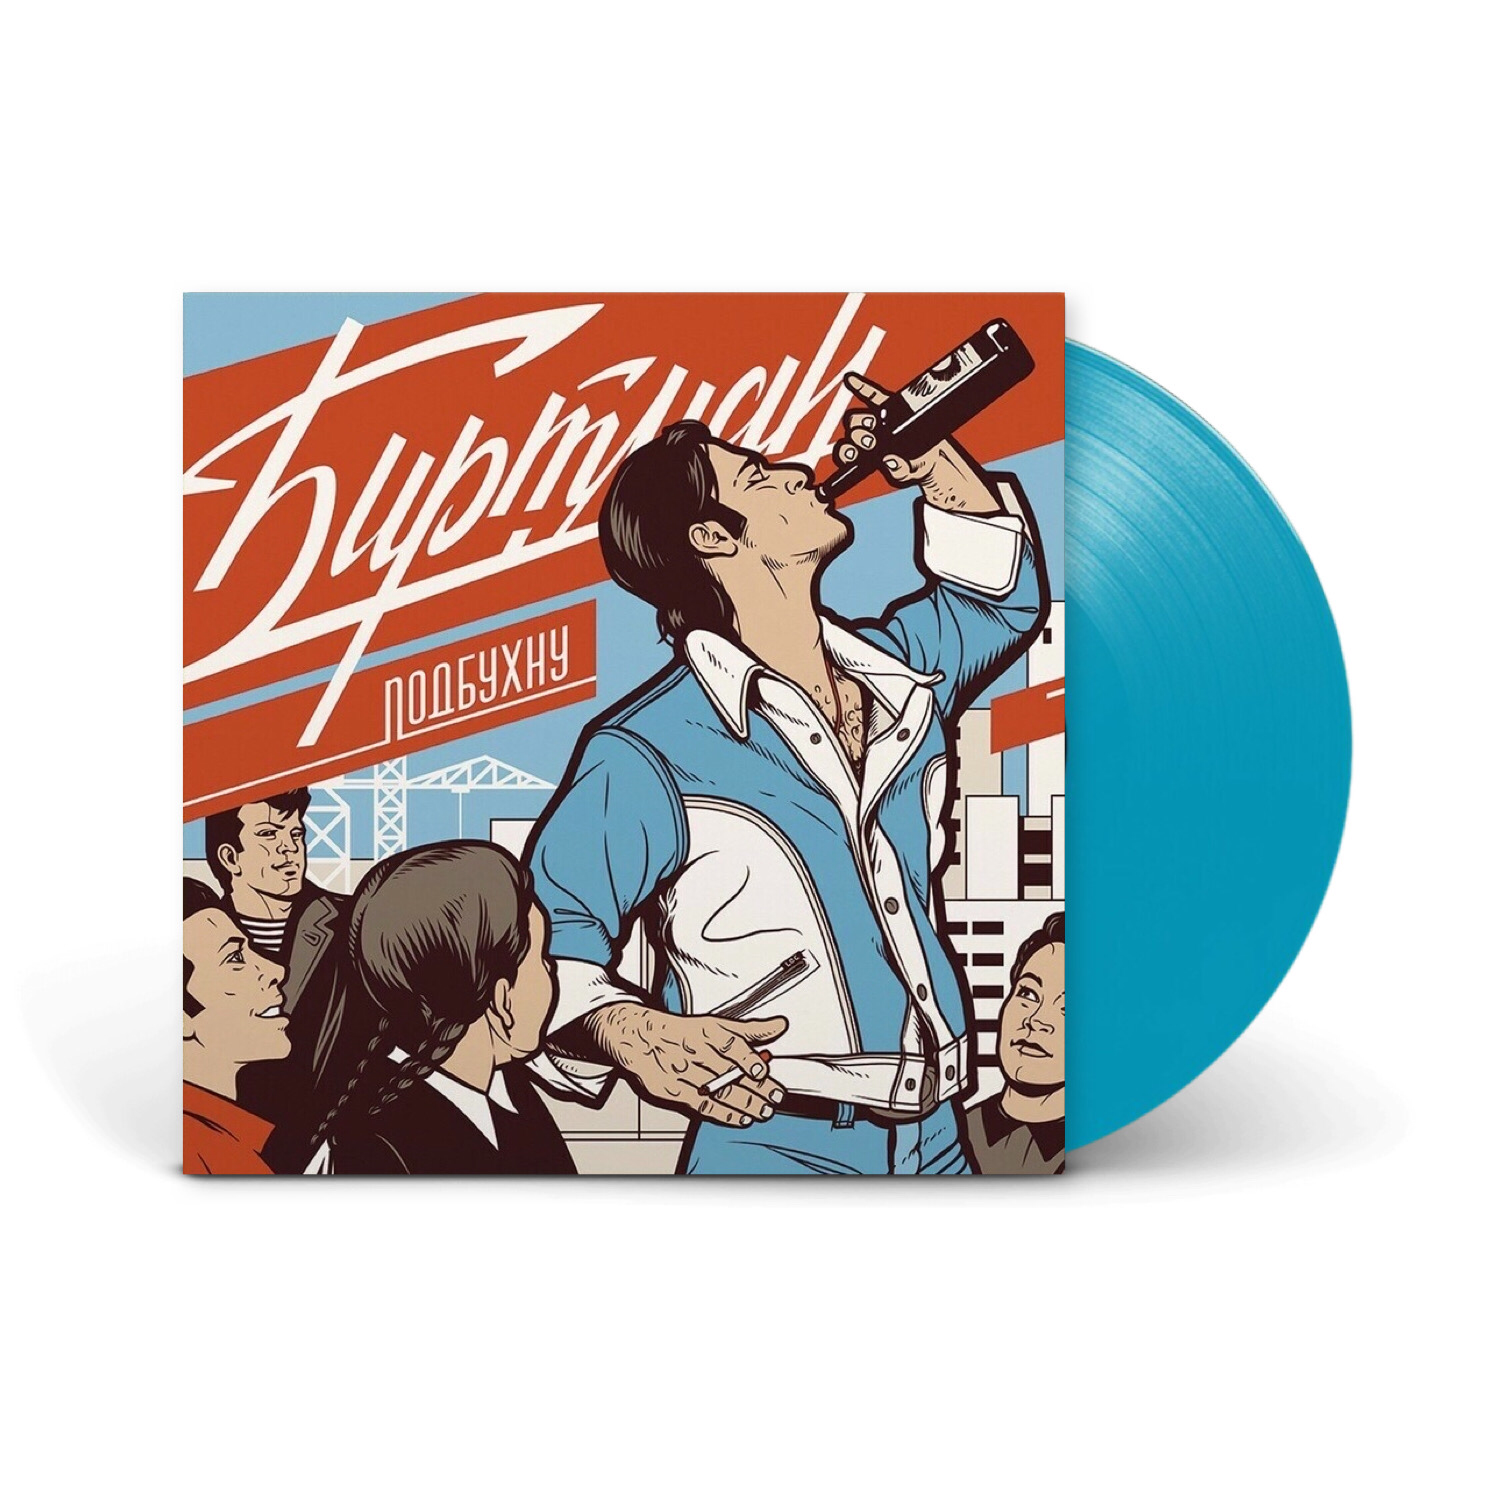 Виниловая пластинка LP: Биртман — «Подбухну» (2019/2020) [Limited Blue Vinyl]